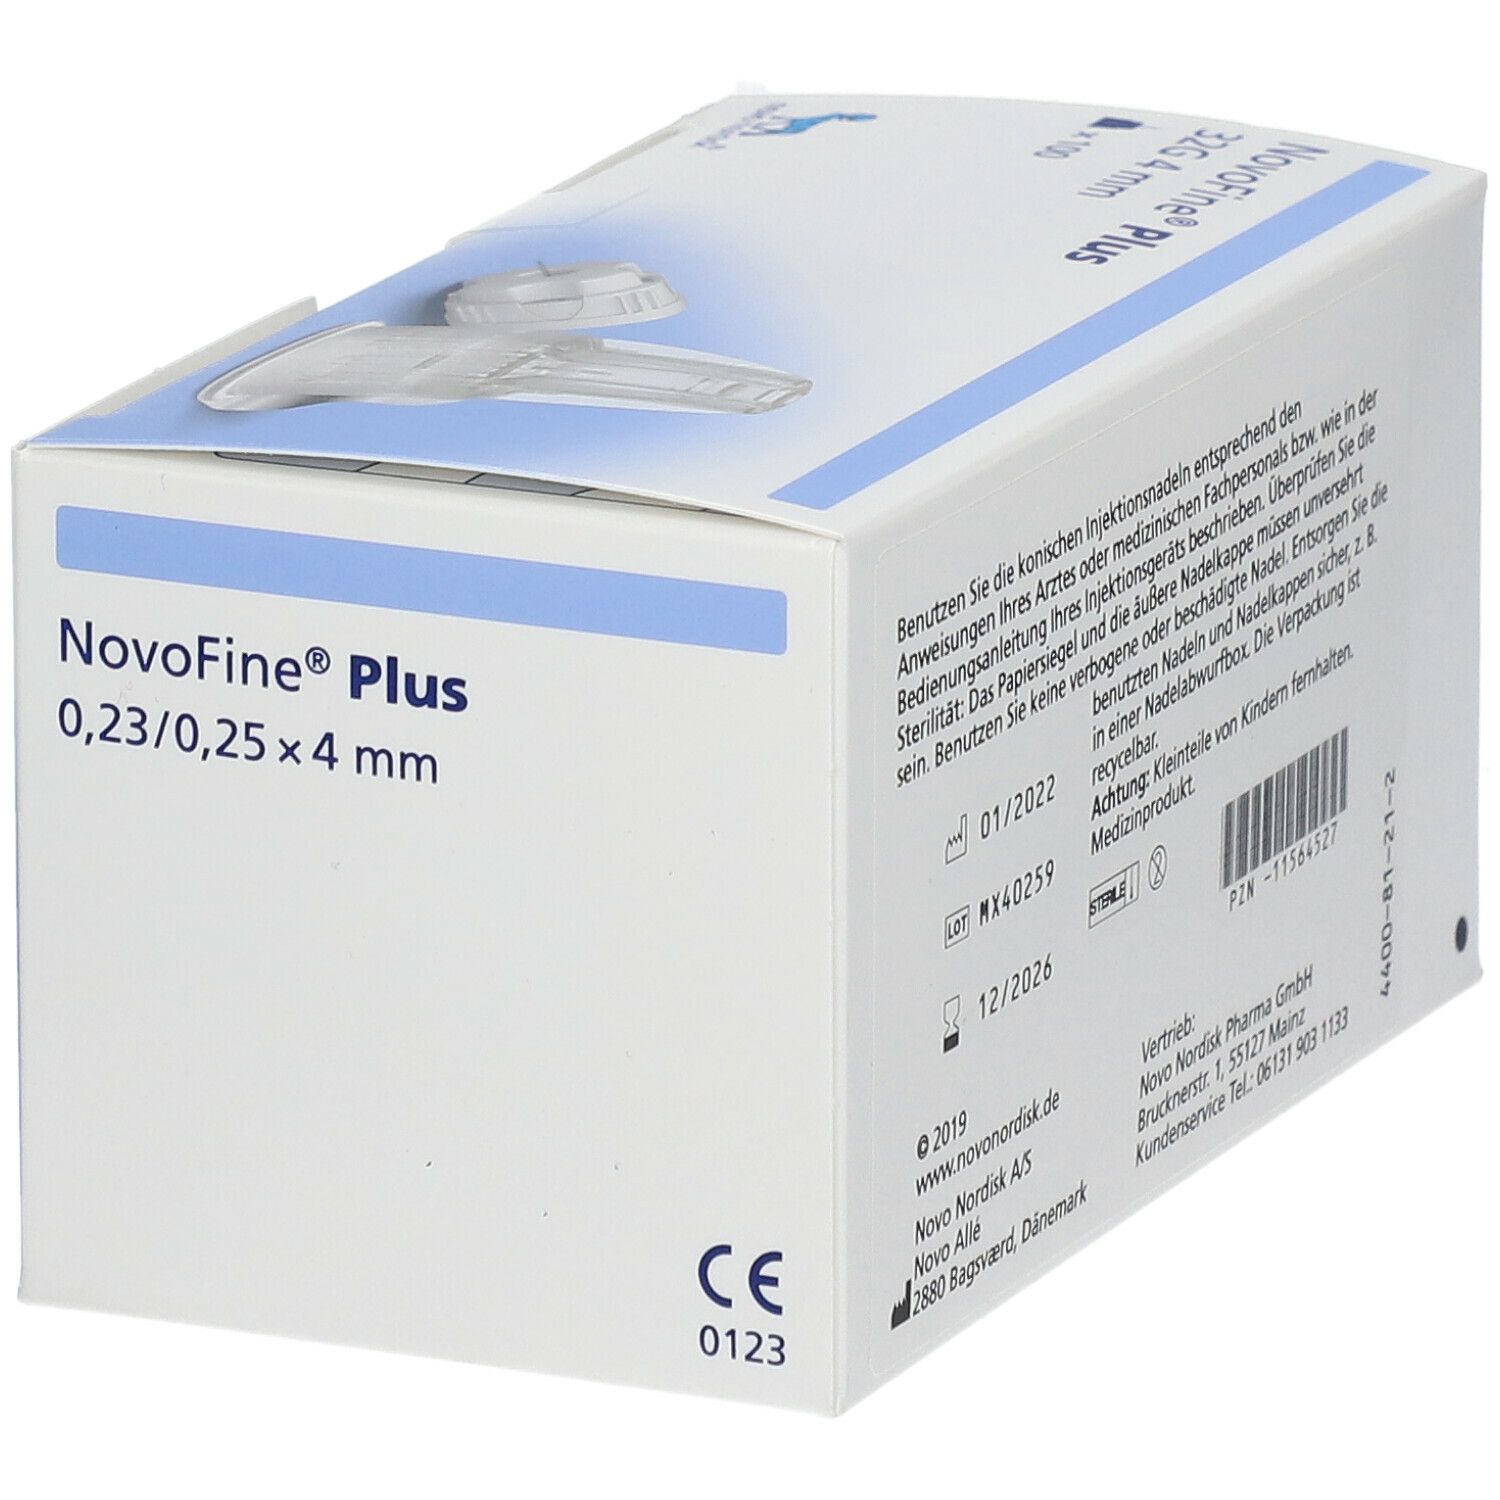 Buy online Novofine Plus Injektionsnadeln 4mm 32g 100 Stück at SWISS TABLETS